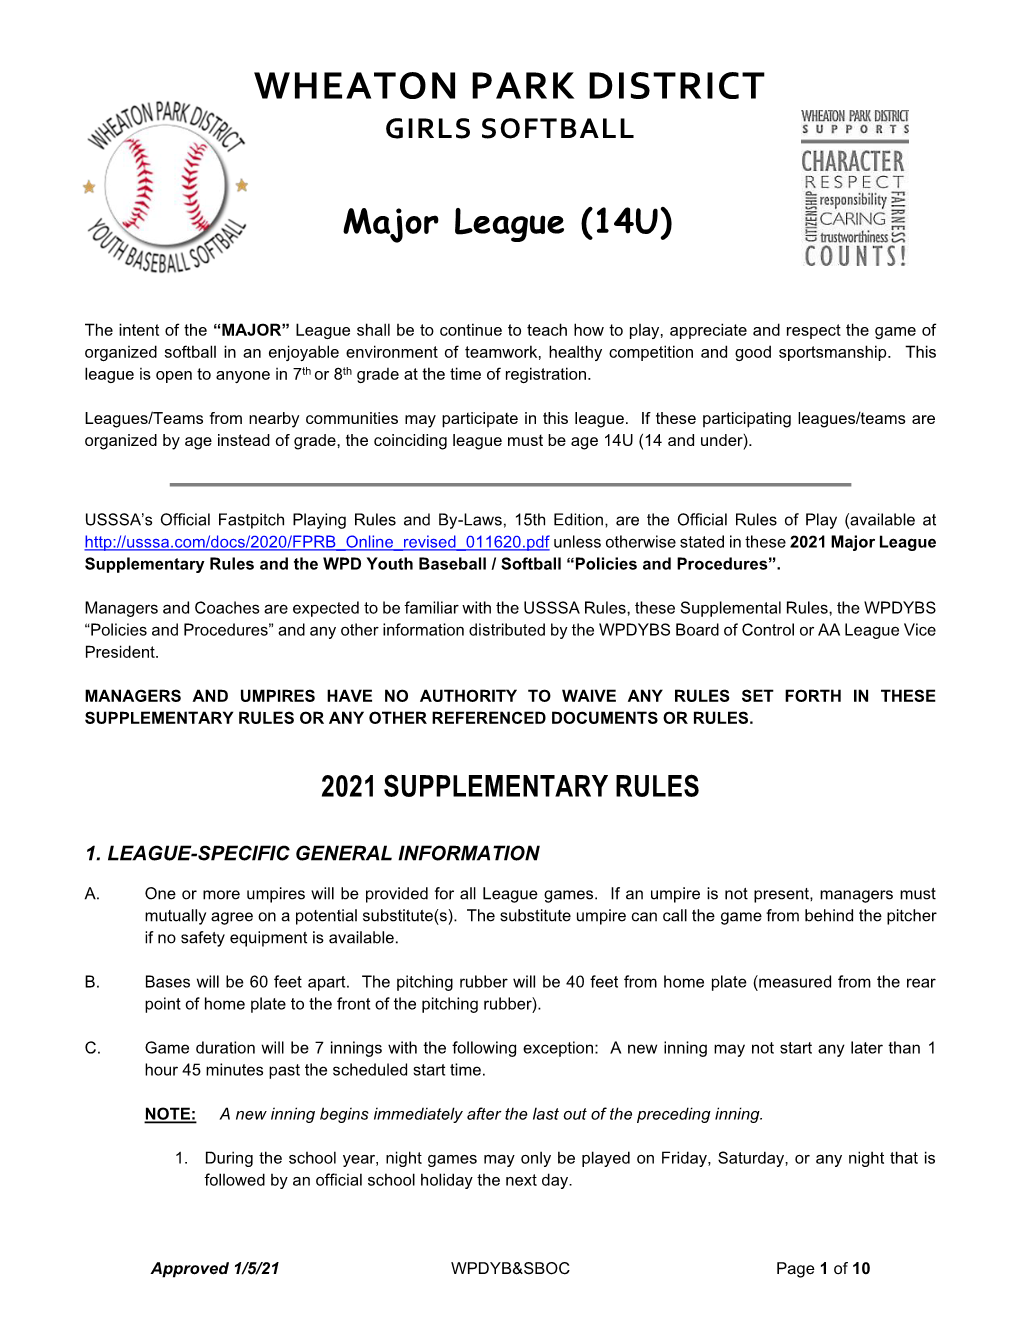 Major Supplementary Rules (PDF)